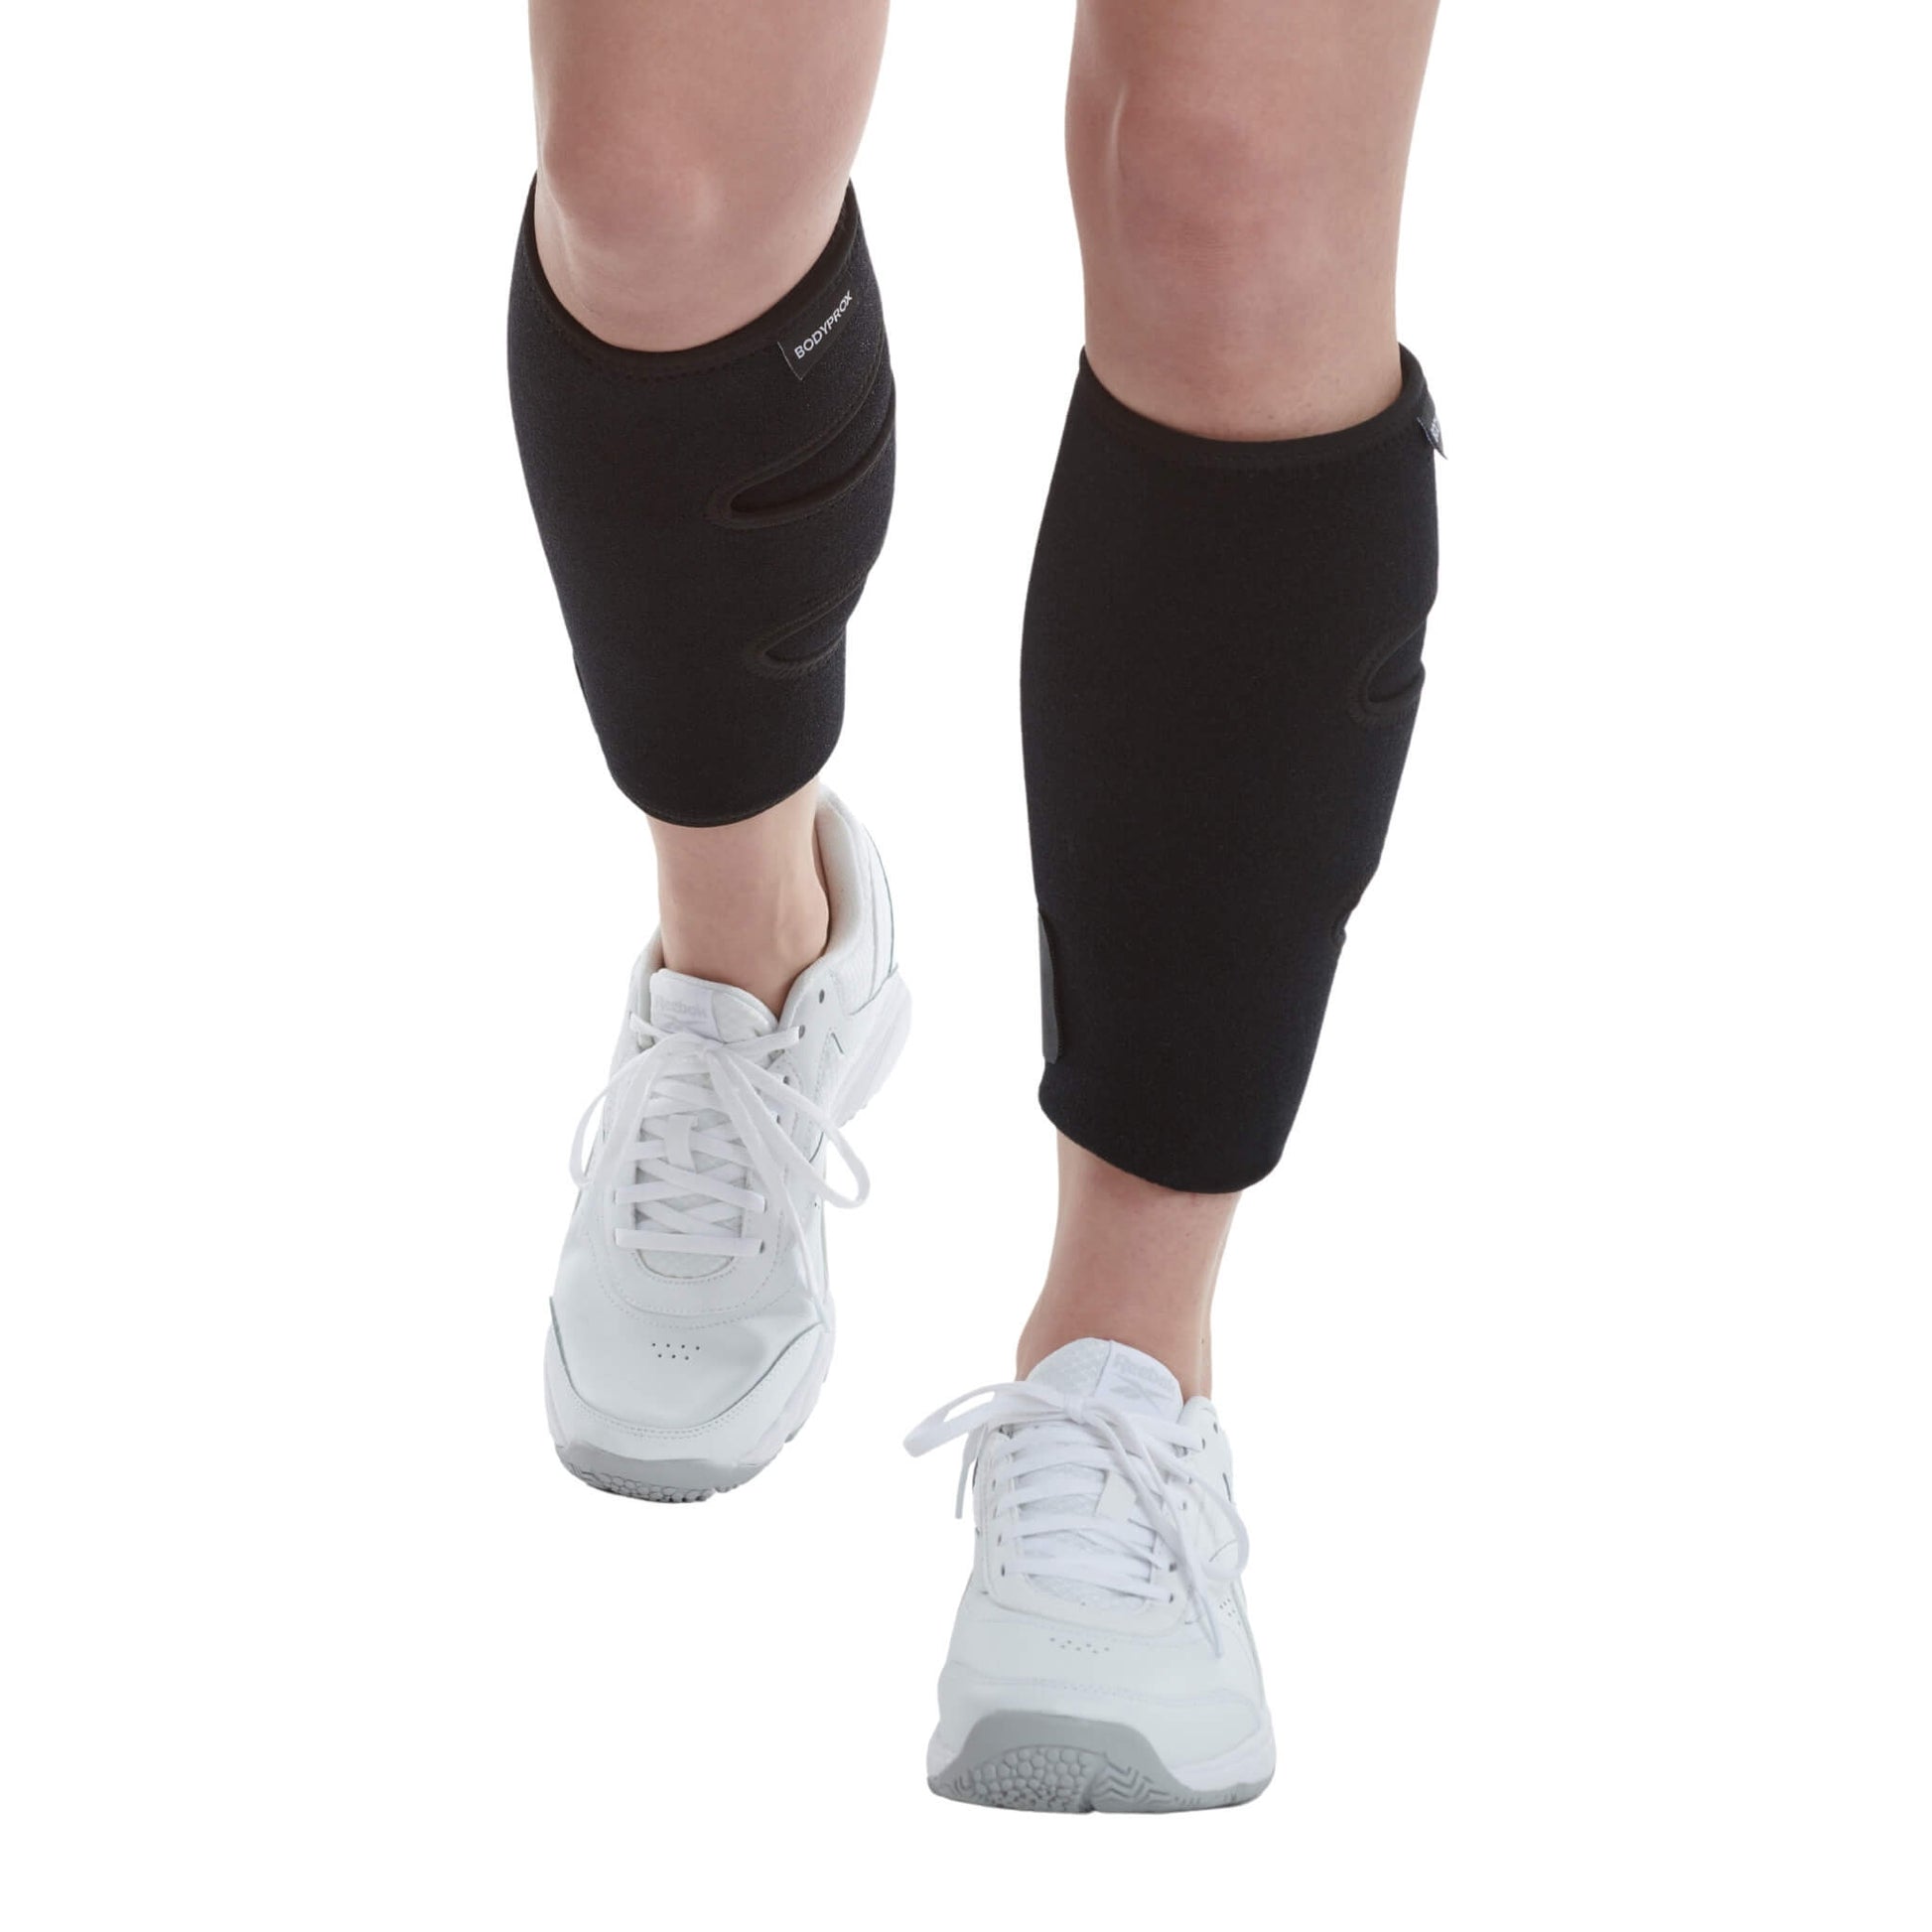 Calf Compression Sleeve Elastic Support Brace Exercise Leg Shin Splints  Large 5056113854929